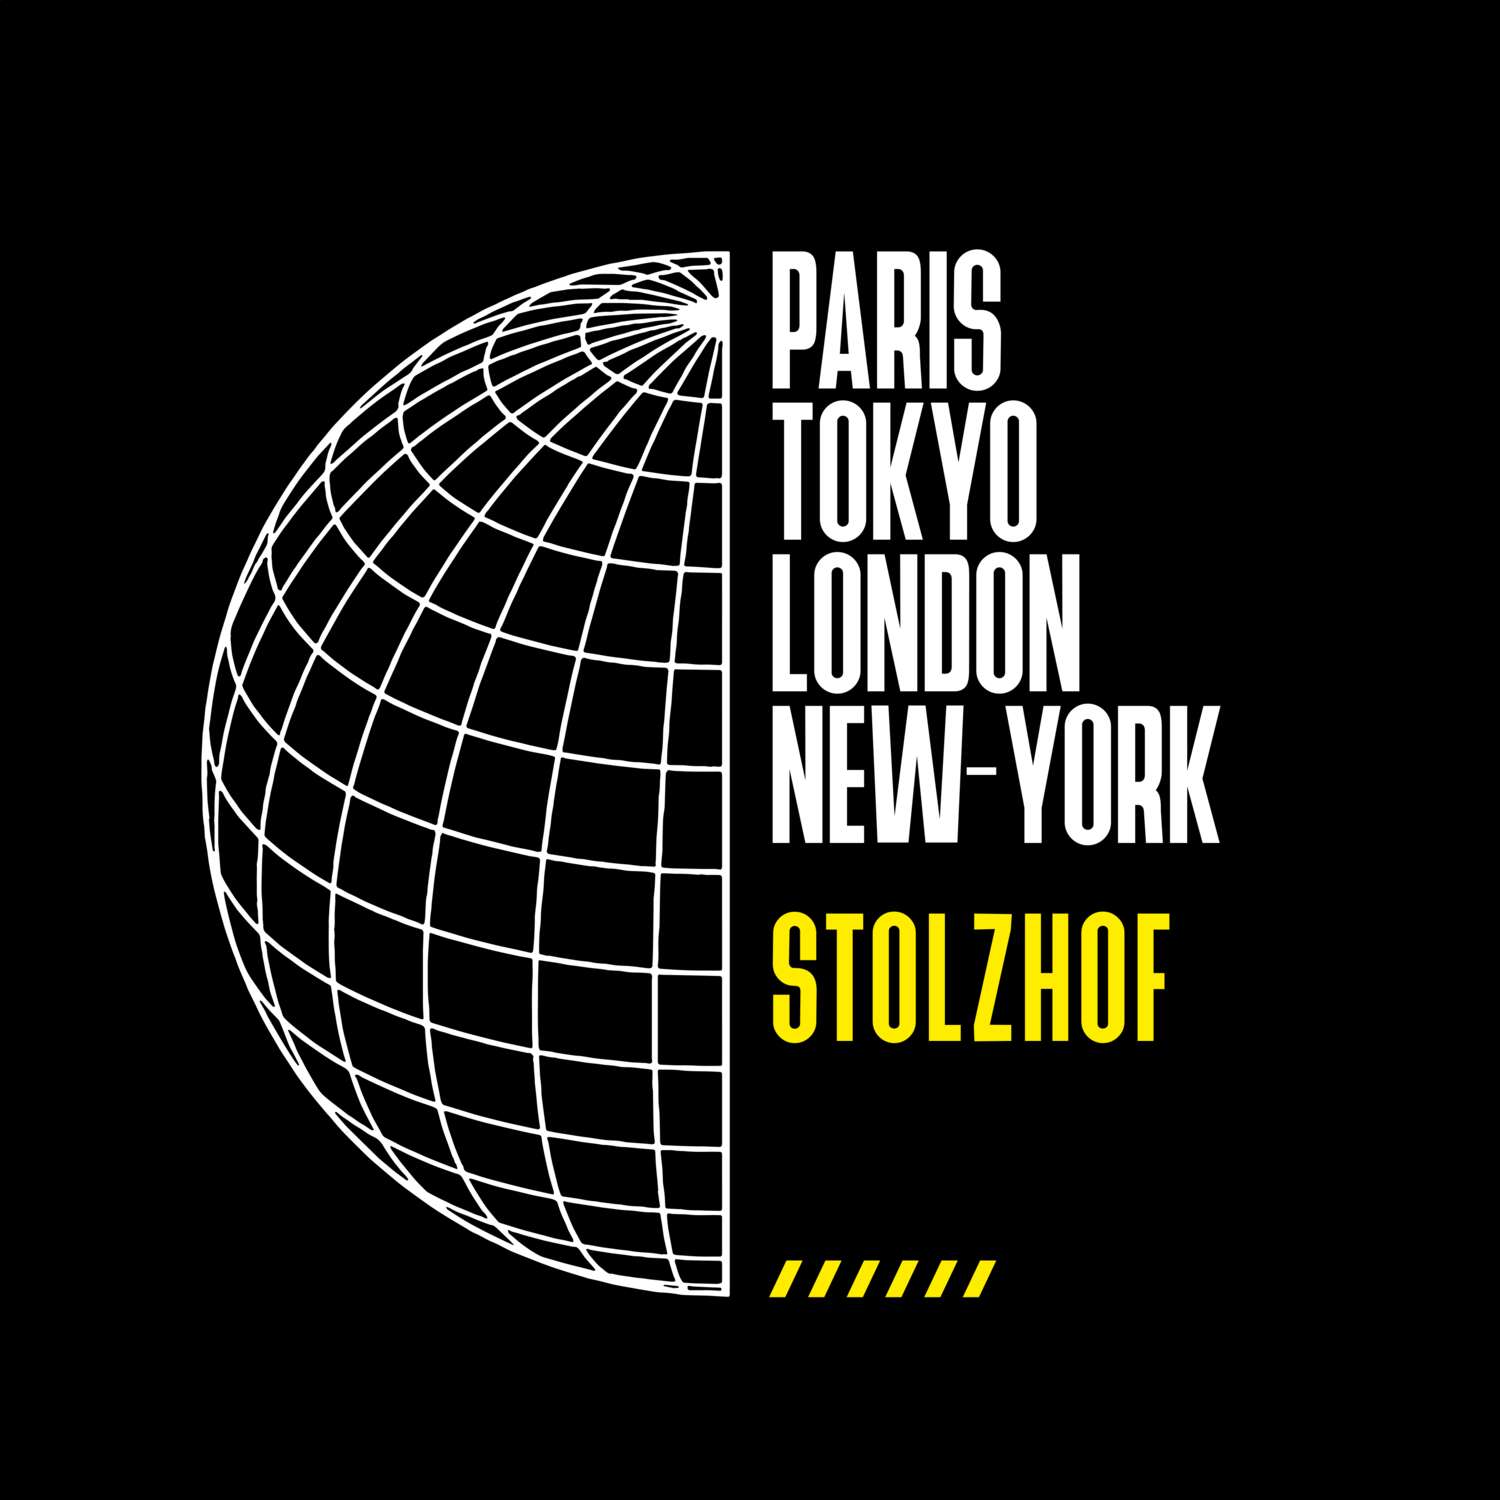 Stolzhof T-Shirt »Paris Tokyo London«